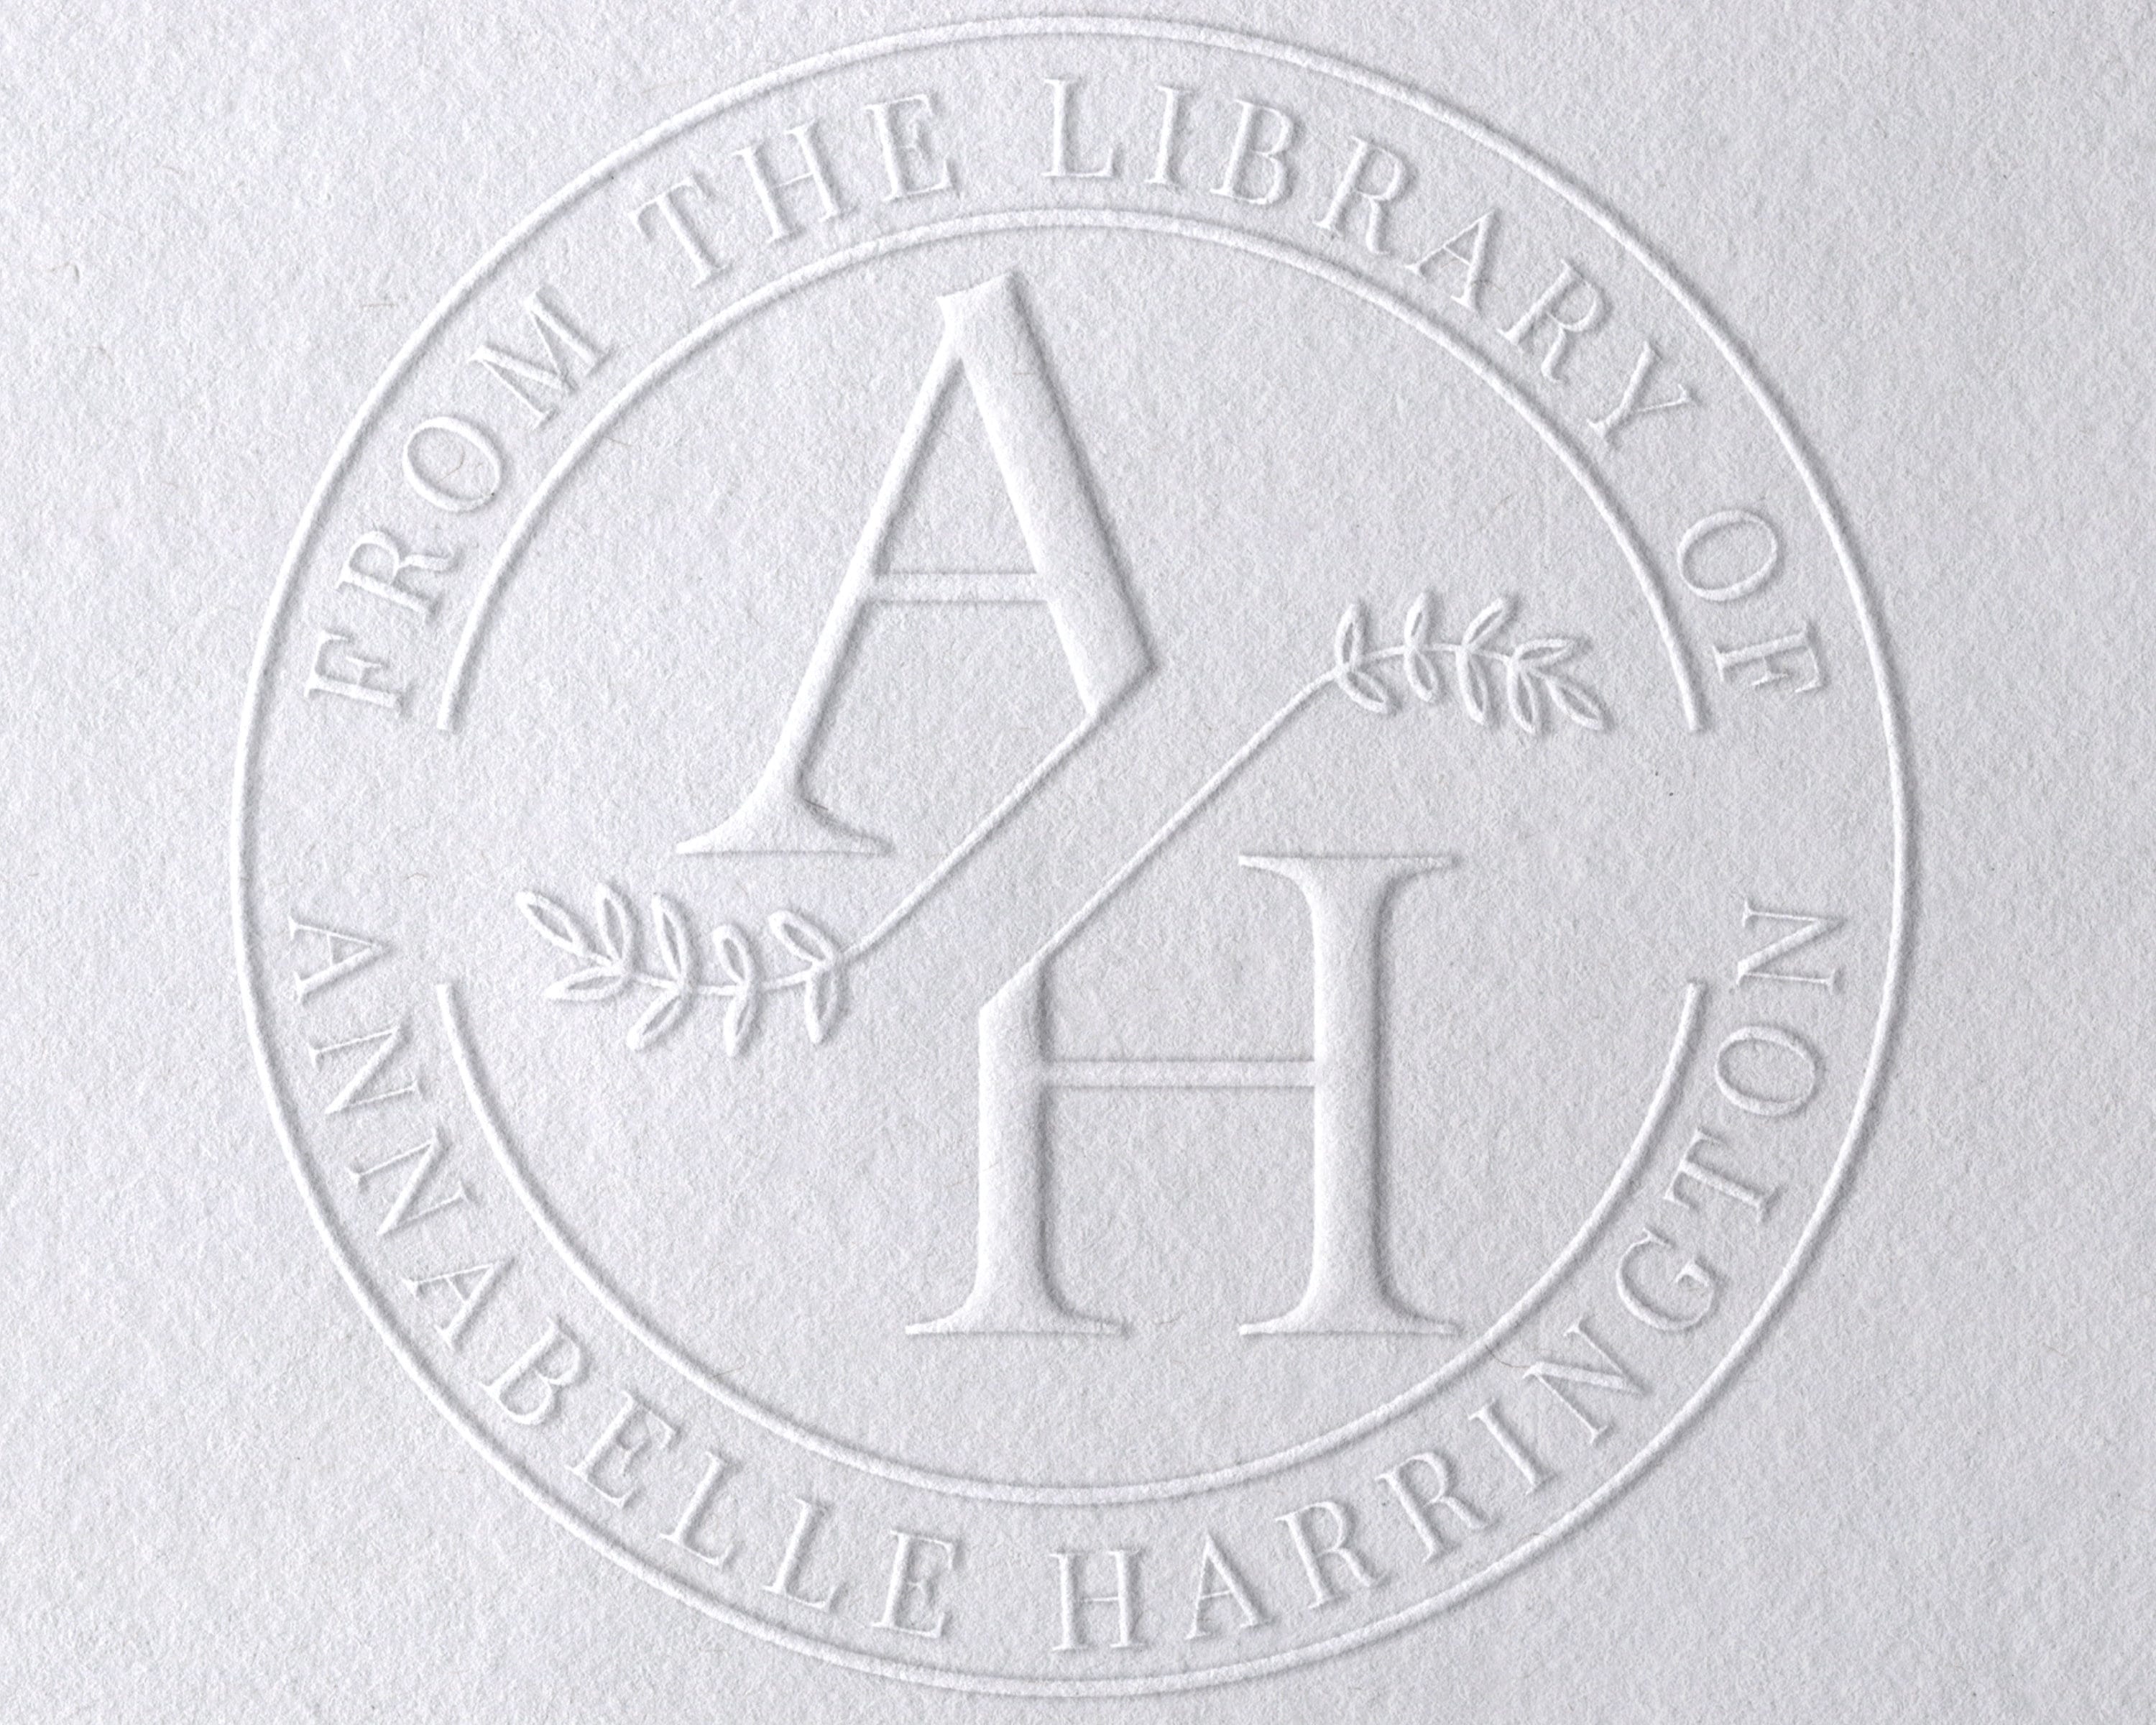 CRASPIRE Sello de sello en relieve con nombre de logotipo personalizado, 1  x 5/8 pulgadas, imagen oficial+texto personalizado monograma libro, sello